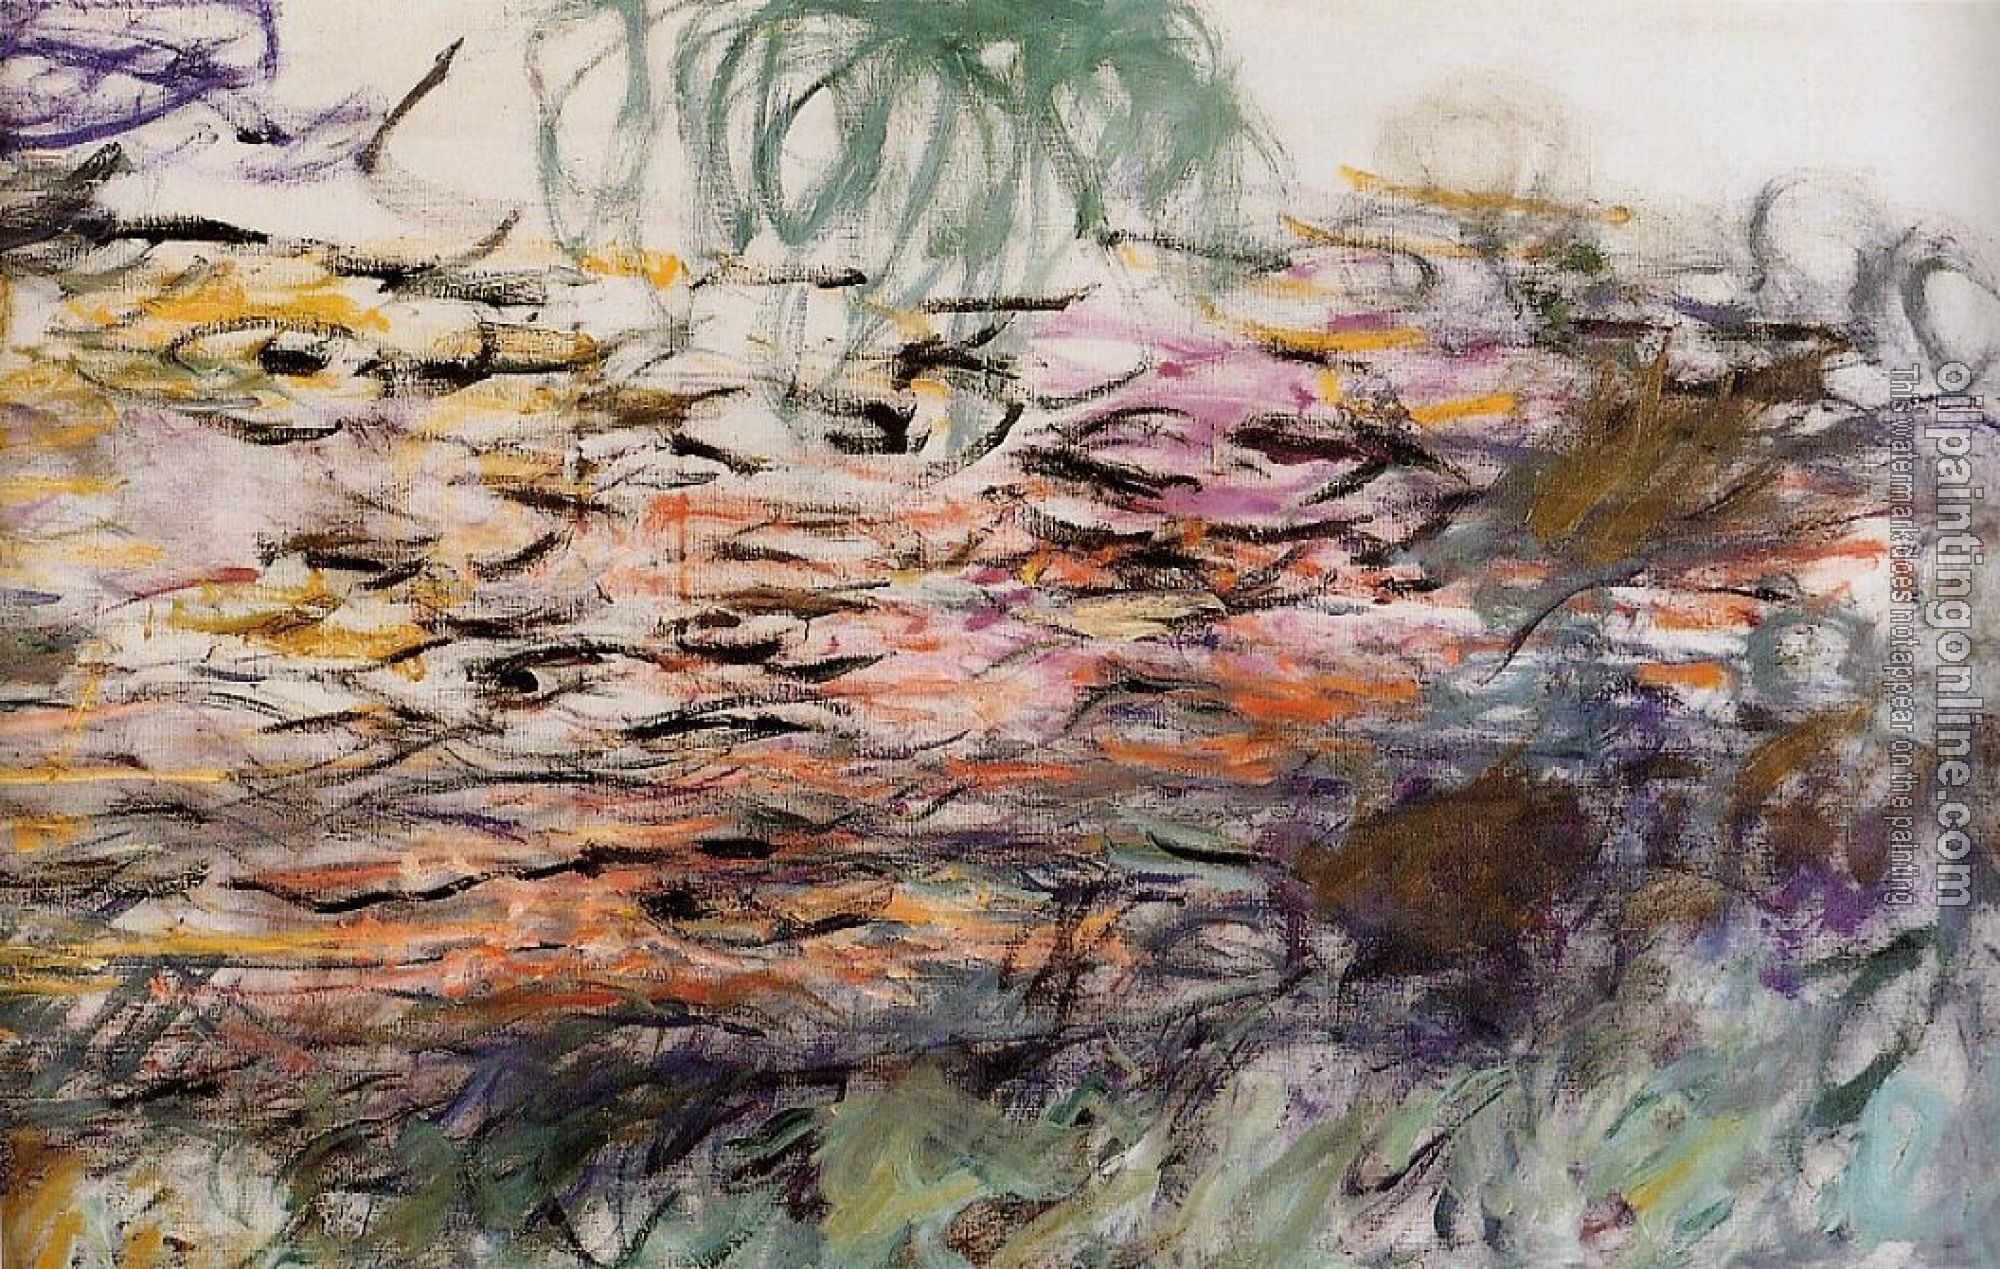 Monet, Claude Oscar - Water-Lilies, right half